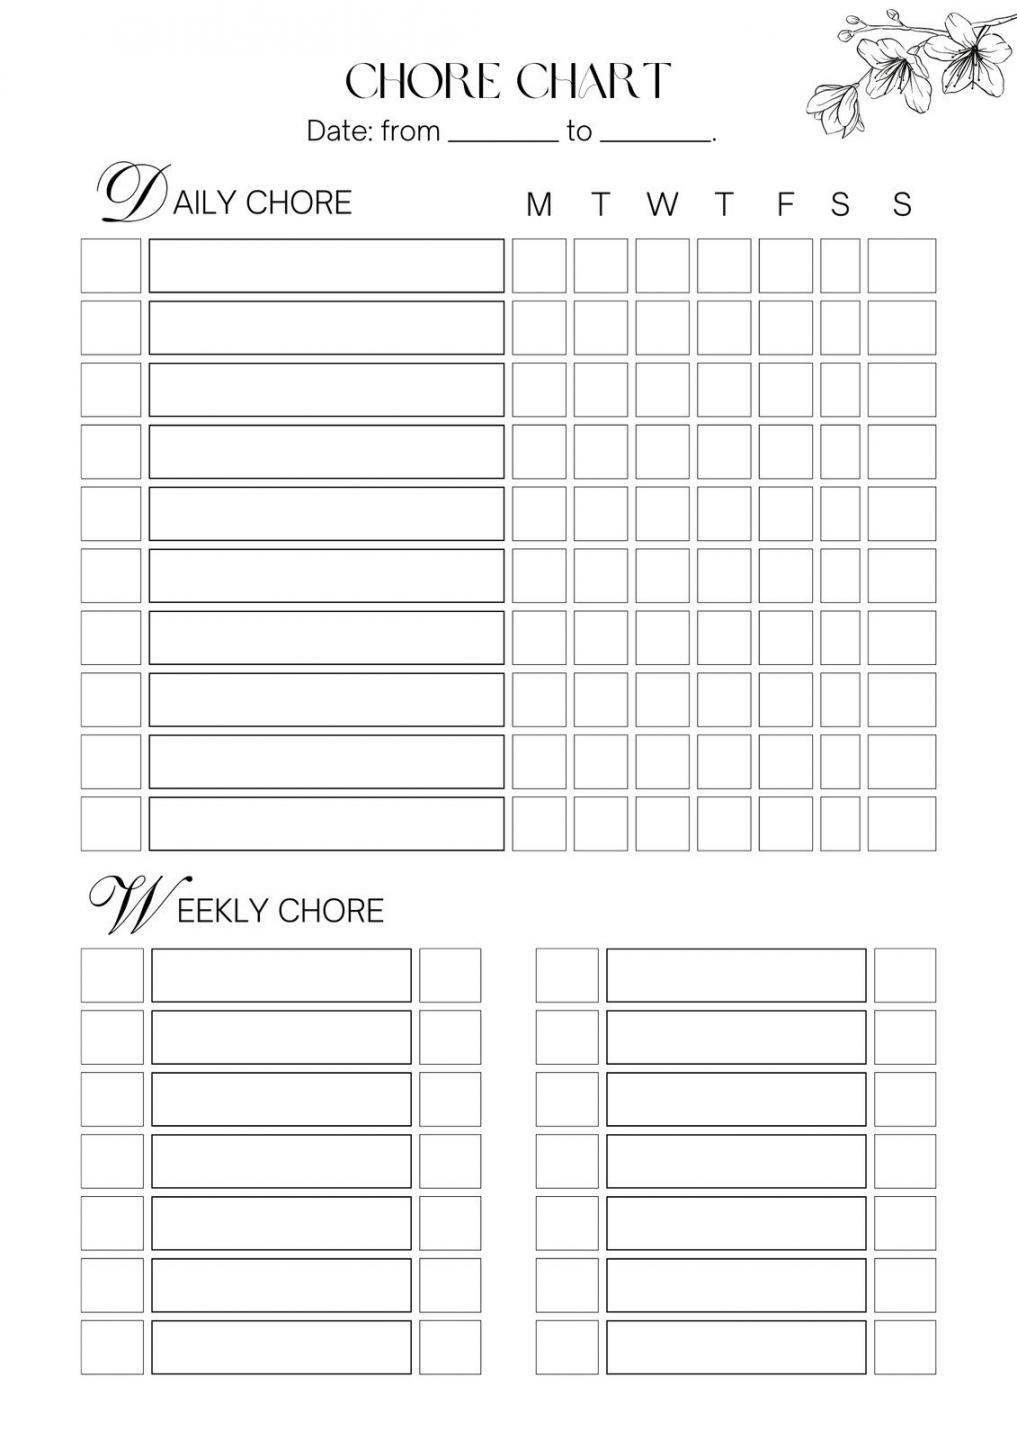 Chore Chart Free Printable - Printable - Free customizable chore chart templates to print  Canva